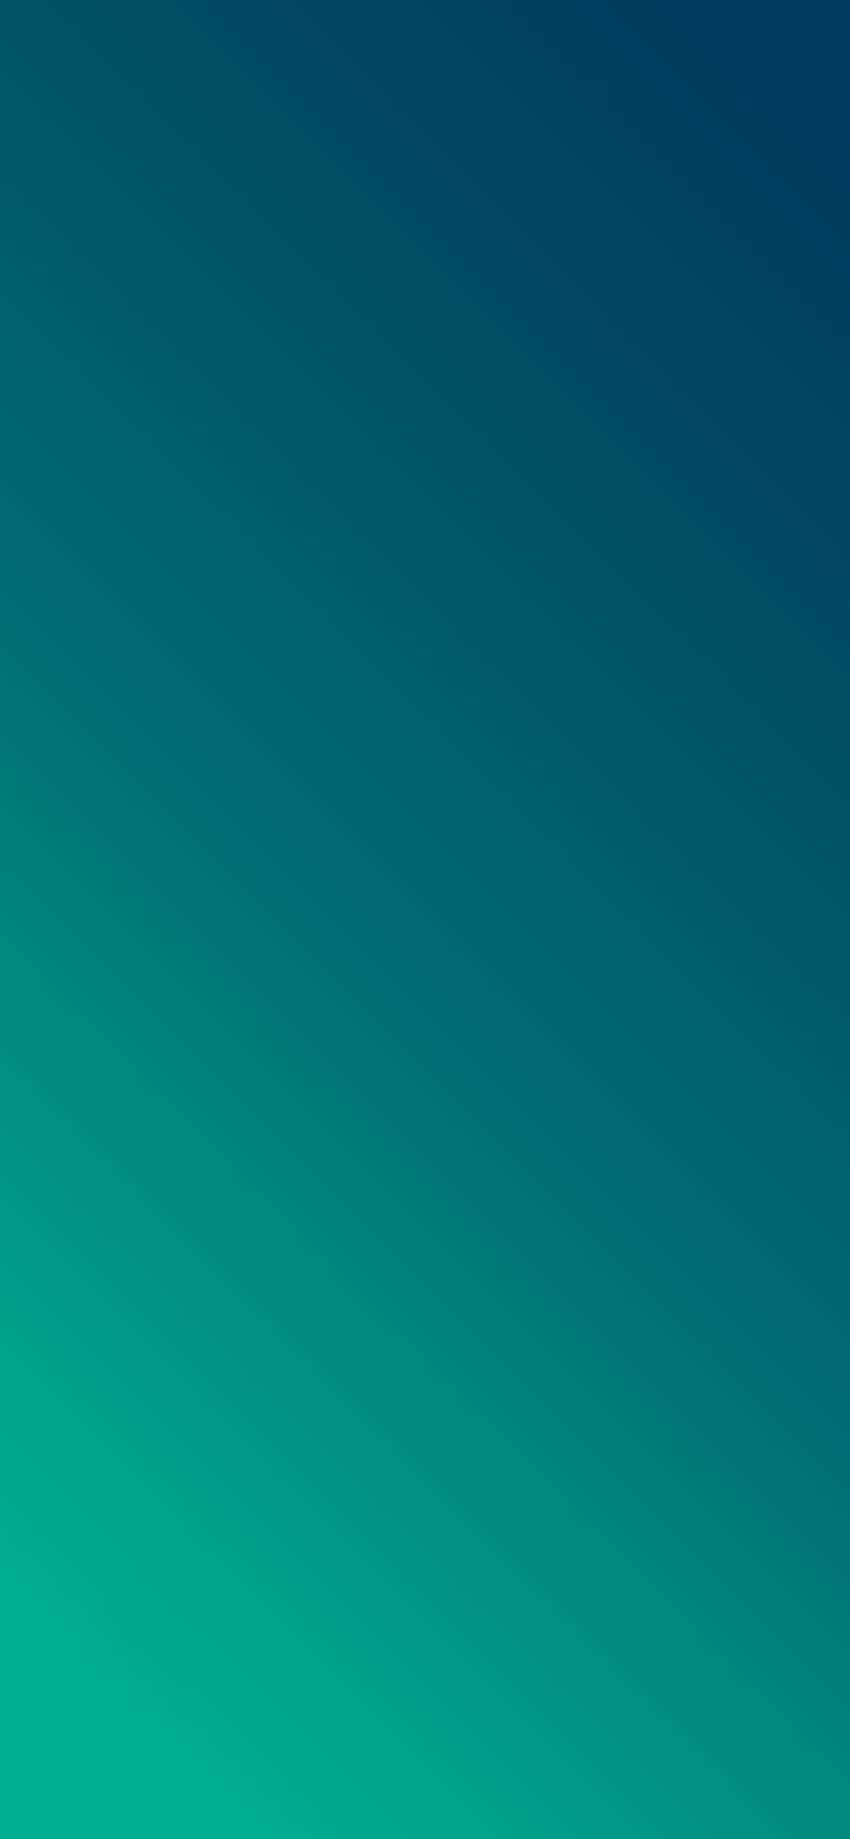 Propre - Dégradé bleu et vert Fond d'écran de téléphone HD